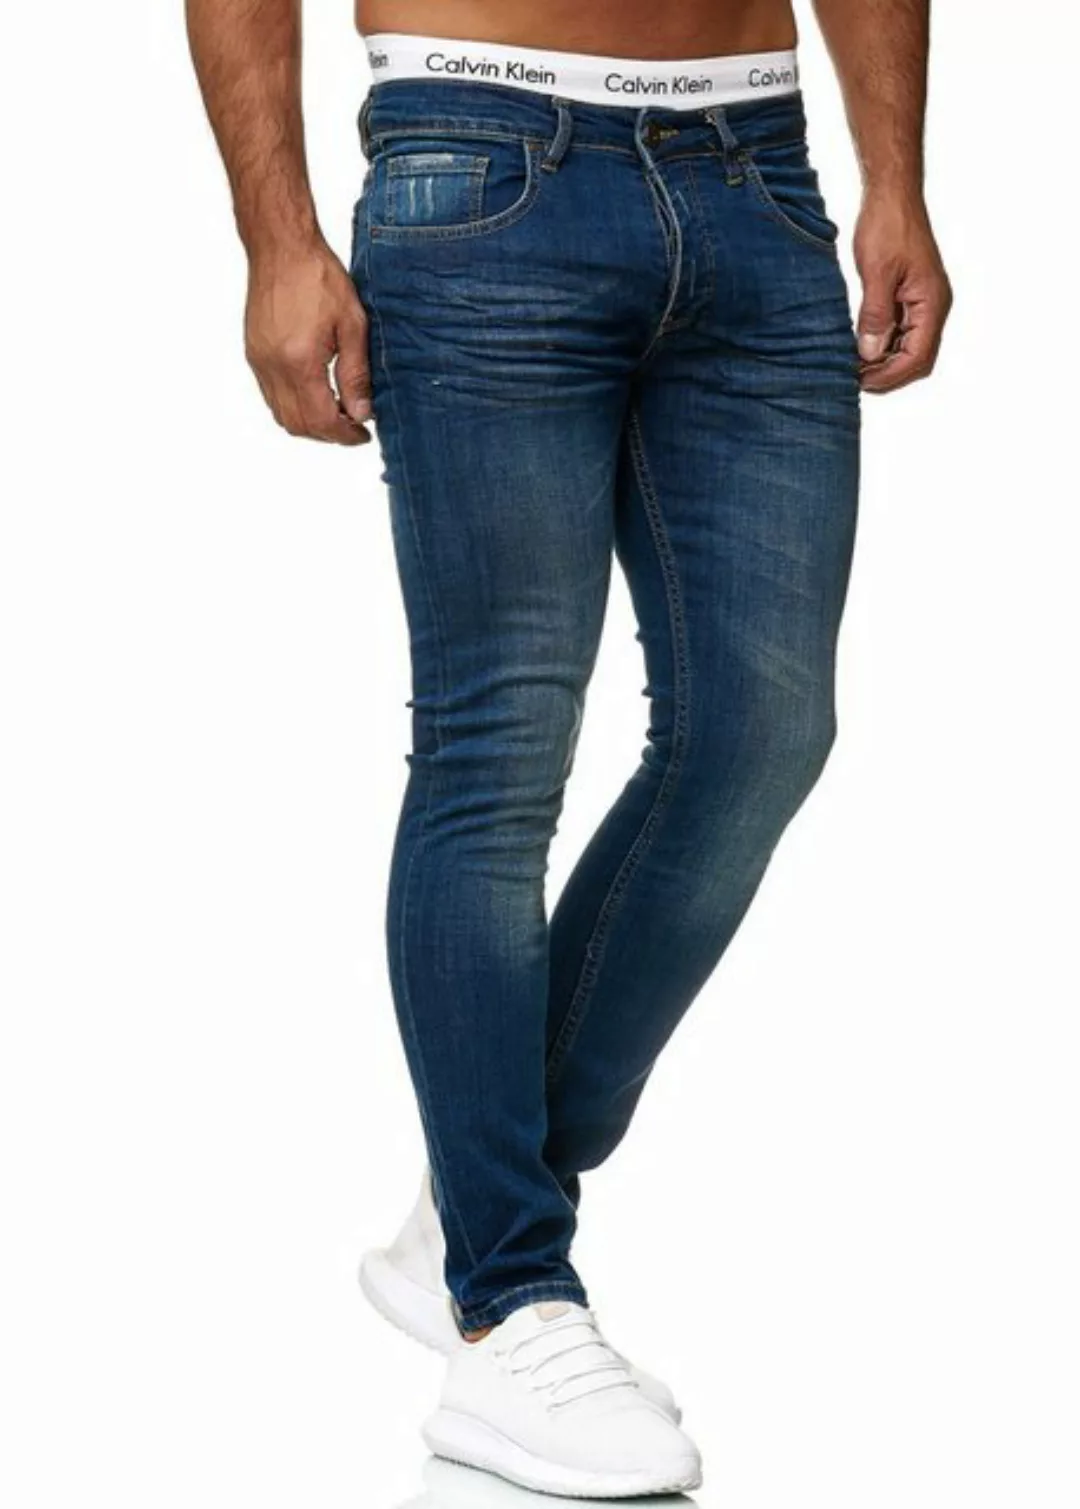 Code47 Skinny-fit-Jeans Code47 Designer Herren Jeans Hose Regular Skinny Fi günstig online kaufen